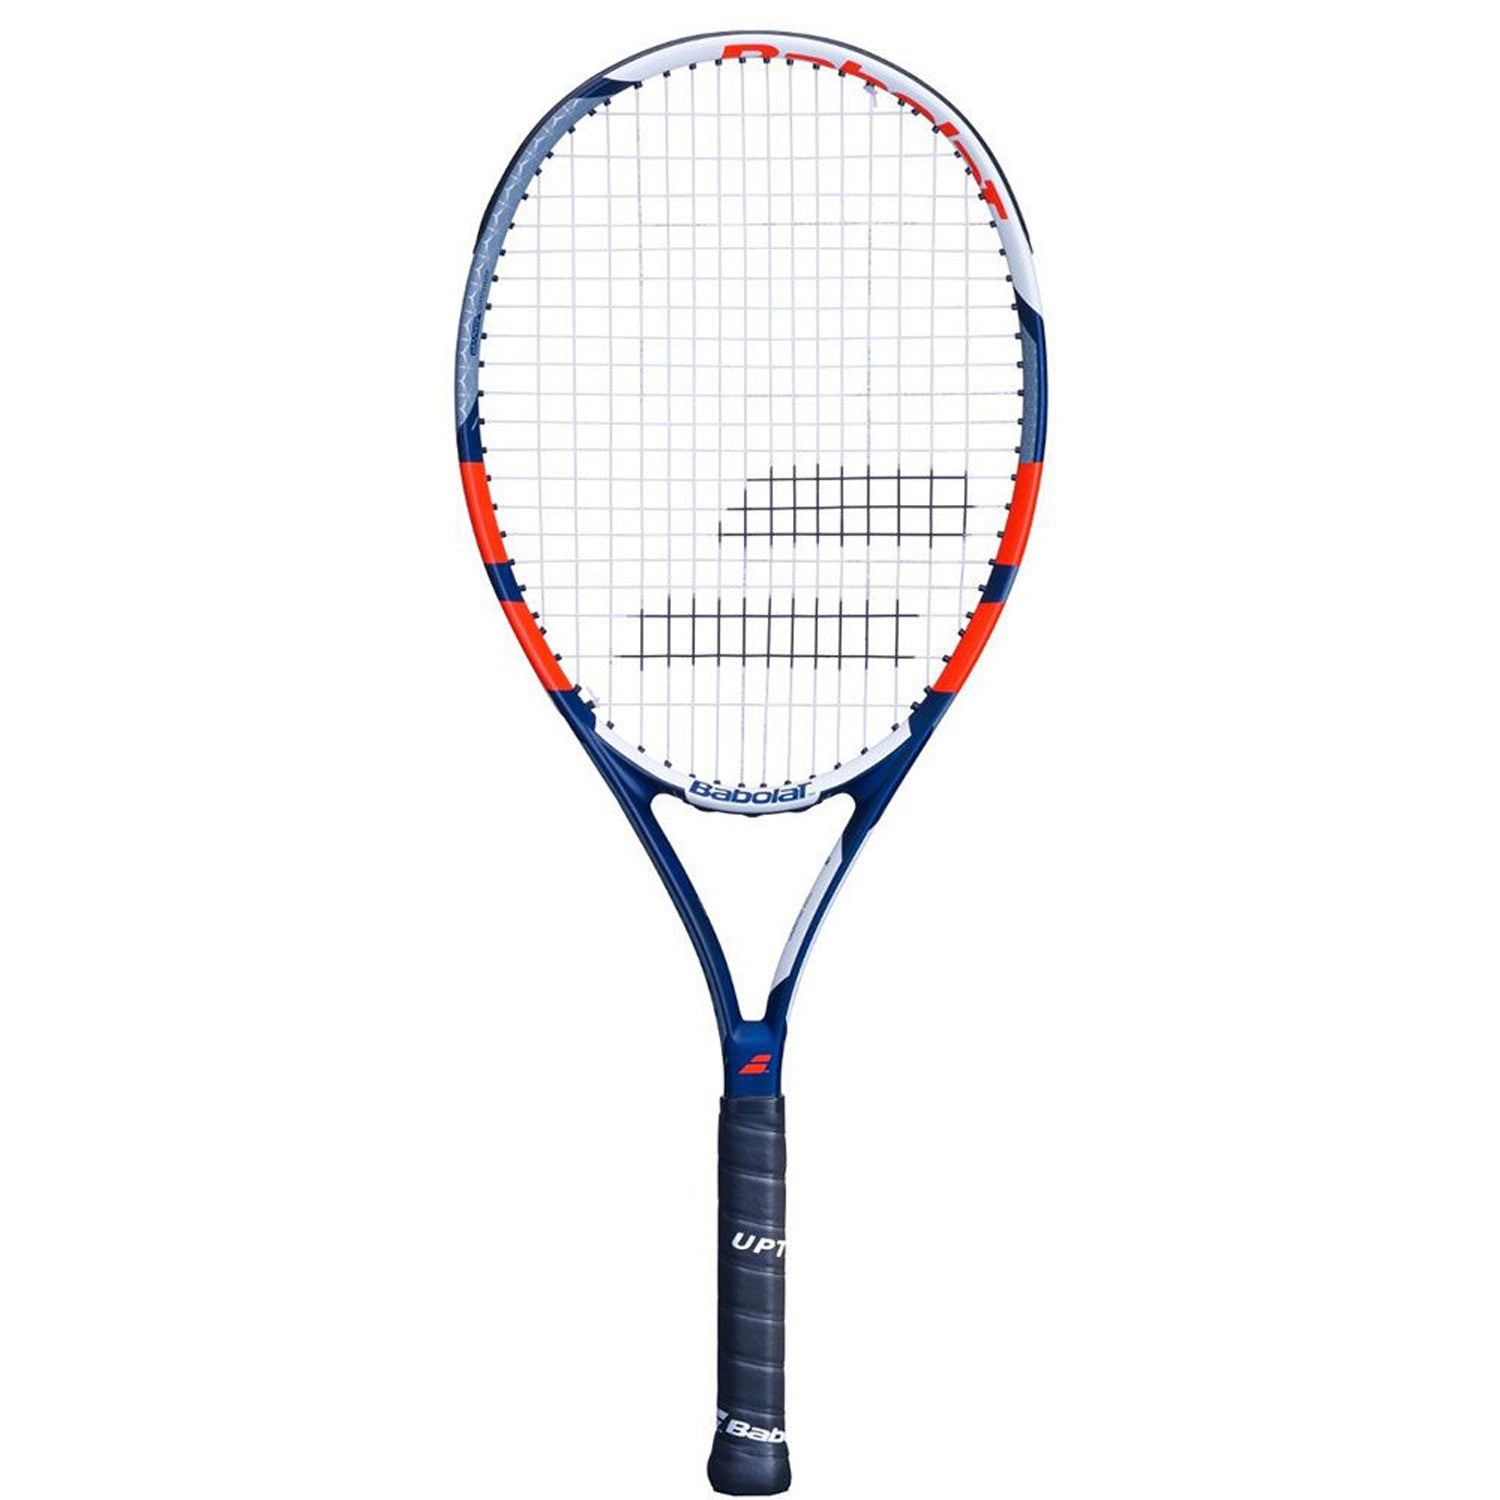 Babolat Pulsion 105 Strung Tennis Racquet - Grey/Red/Blue/White - Best Price online Prokicksports.com